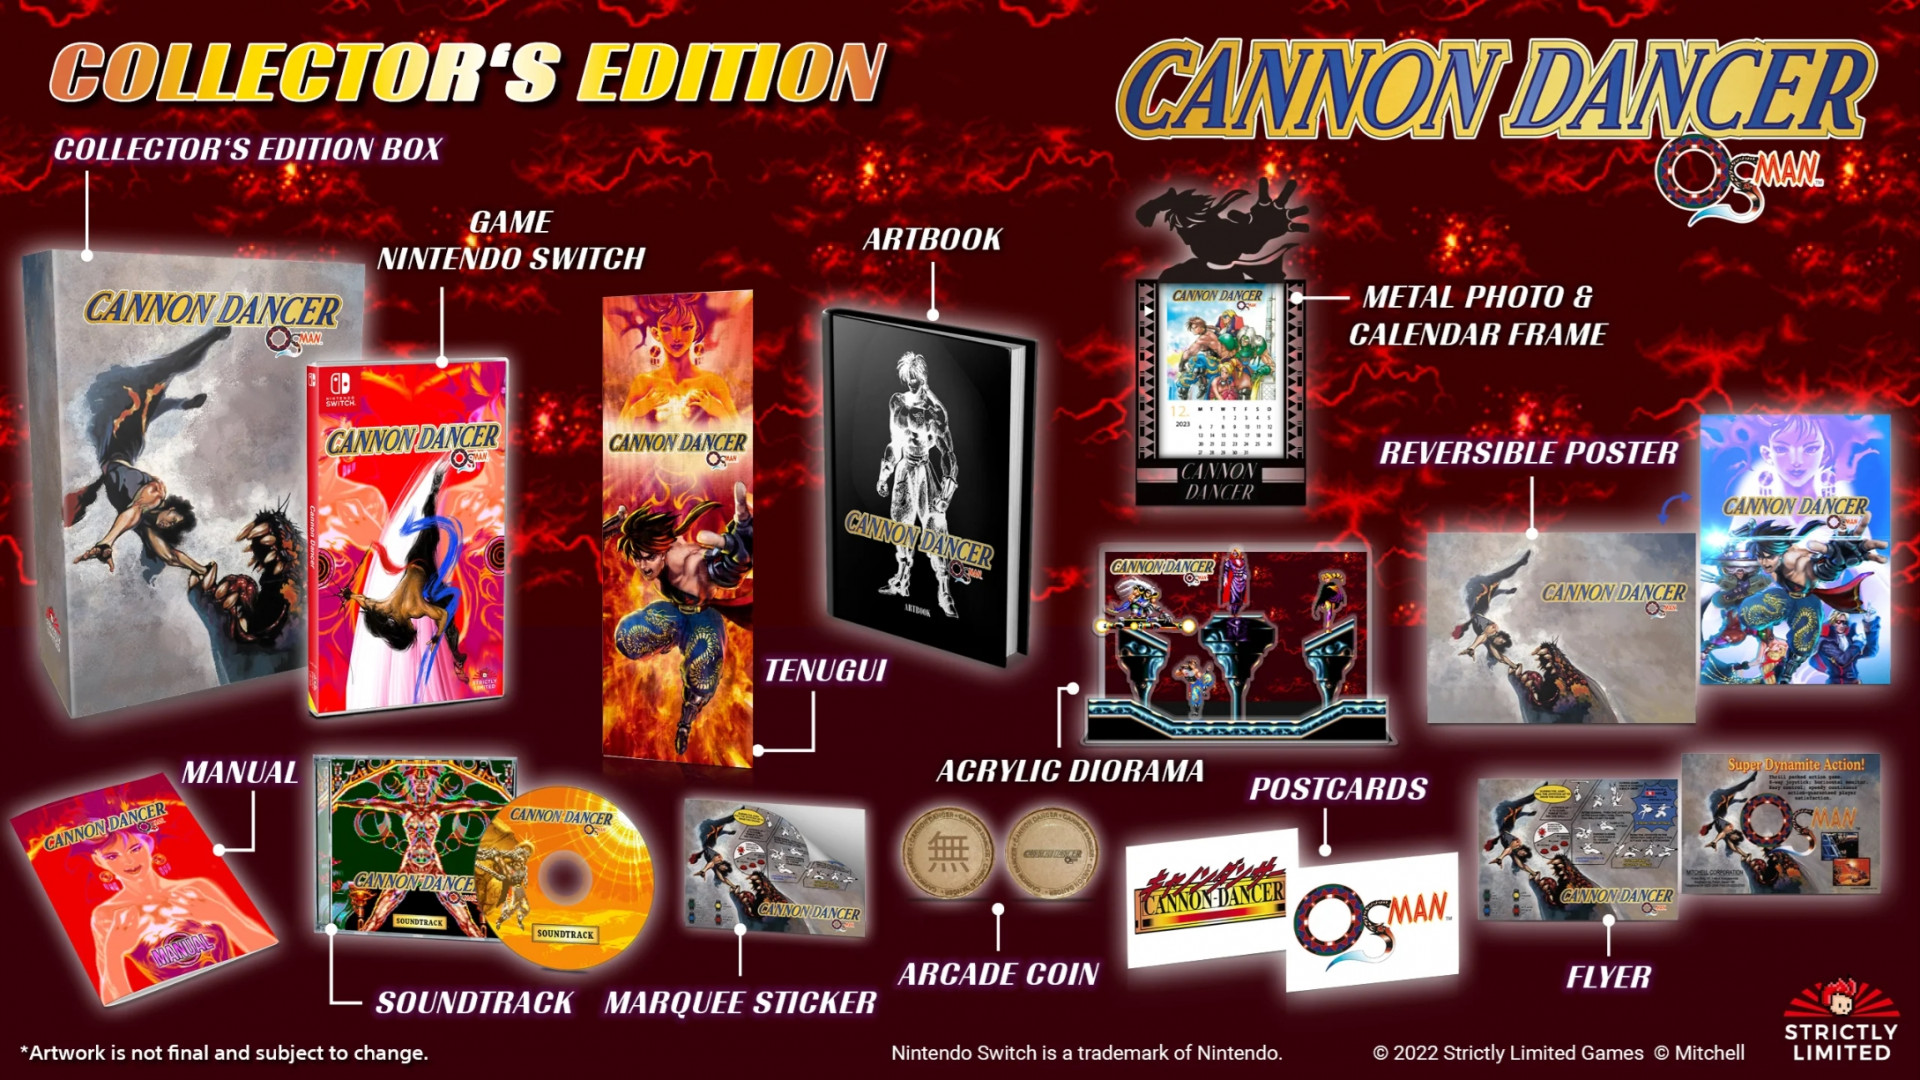 Cannon Dancer Osman Collector's Edition - Nintendo Switch